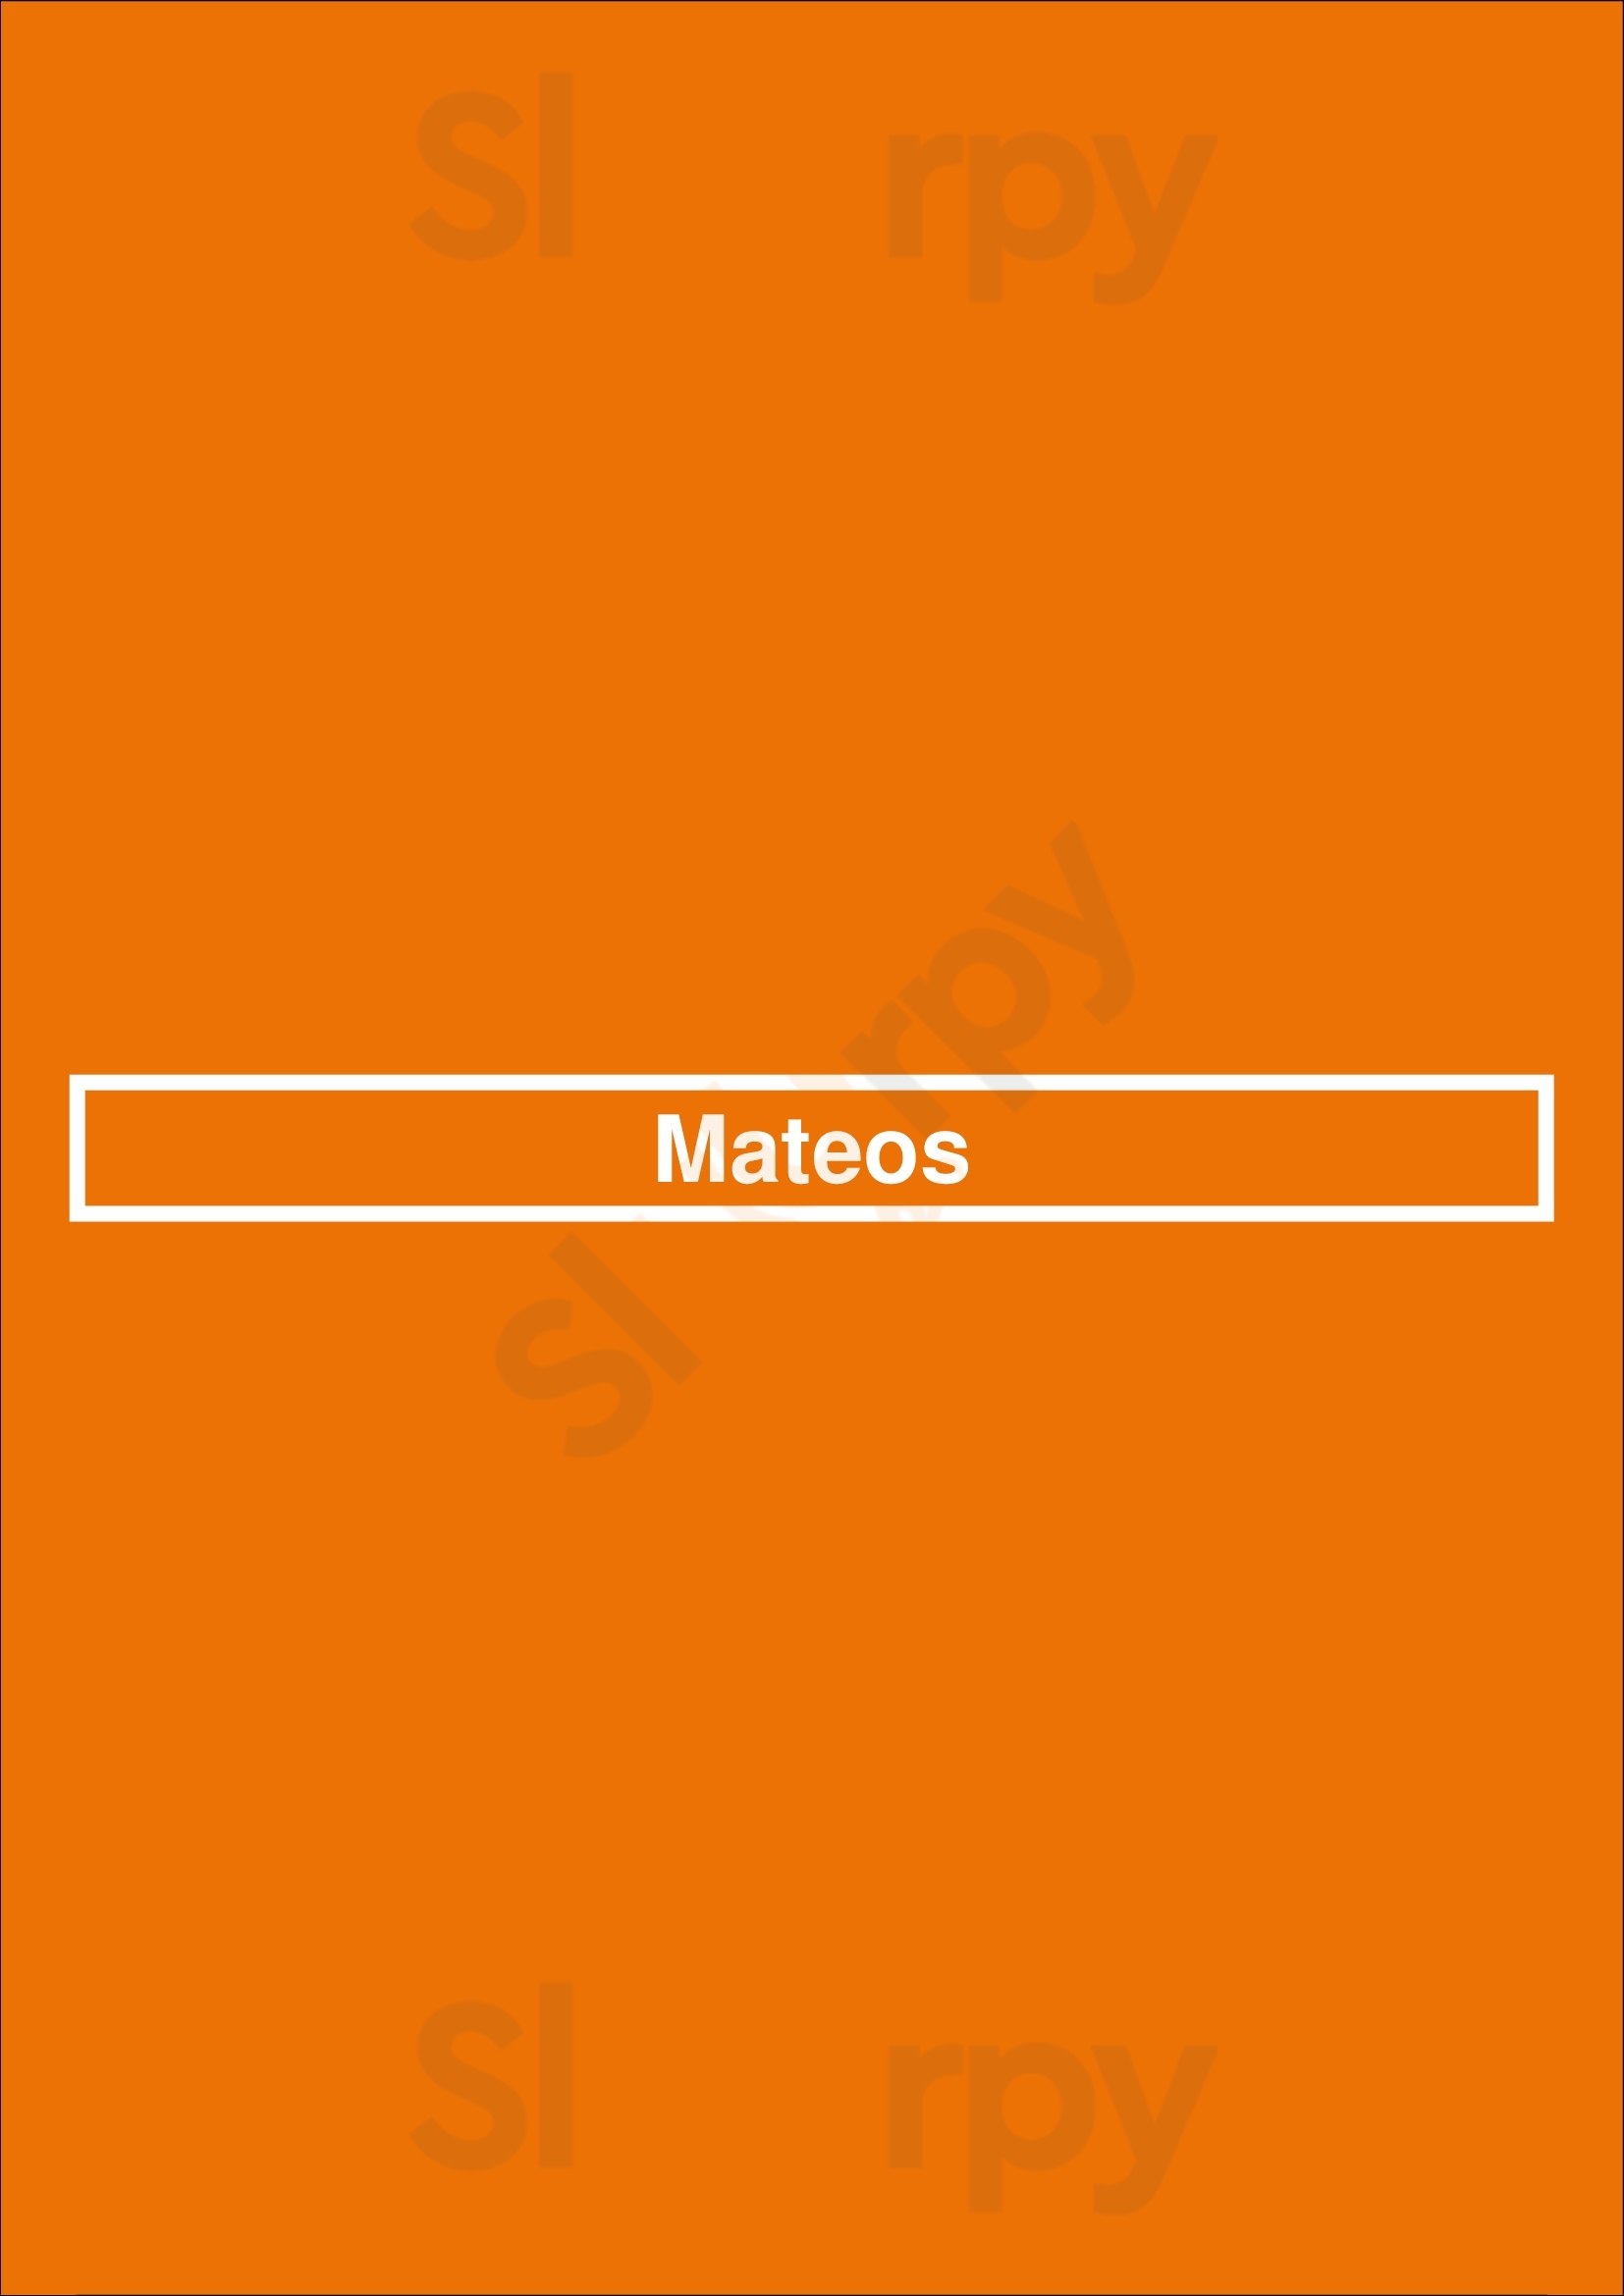 Mateos Buenos Aires Menu - 1